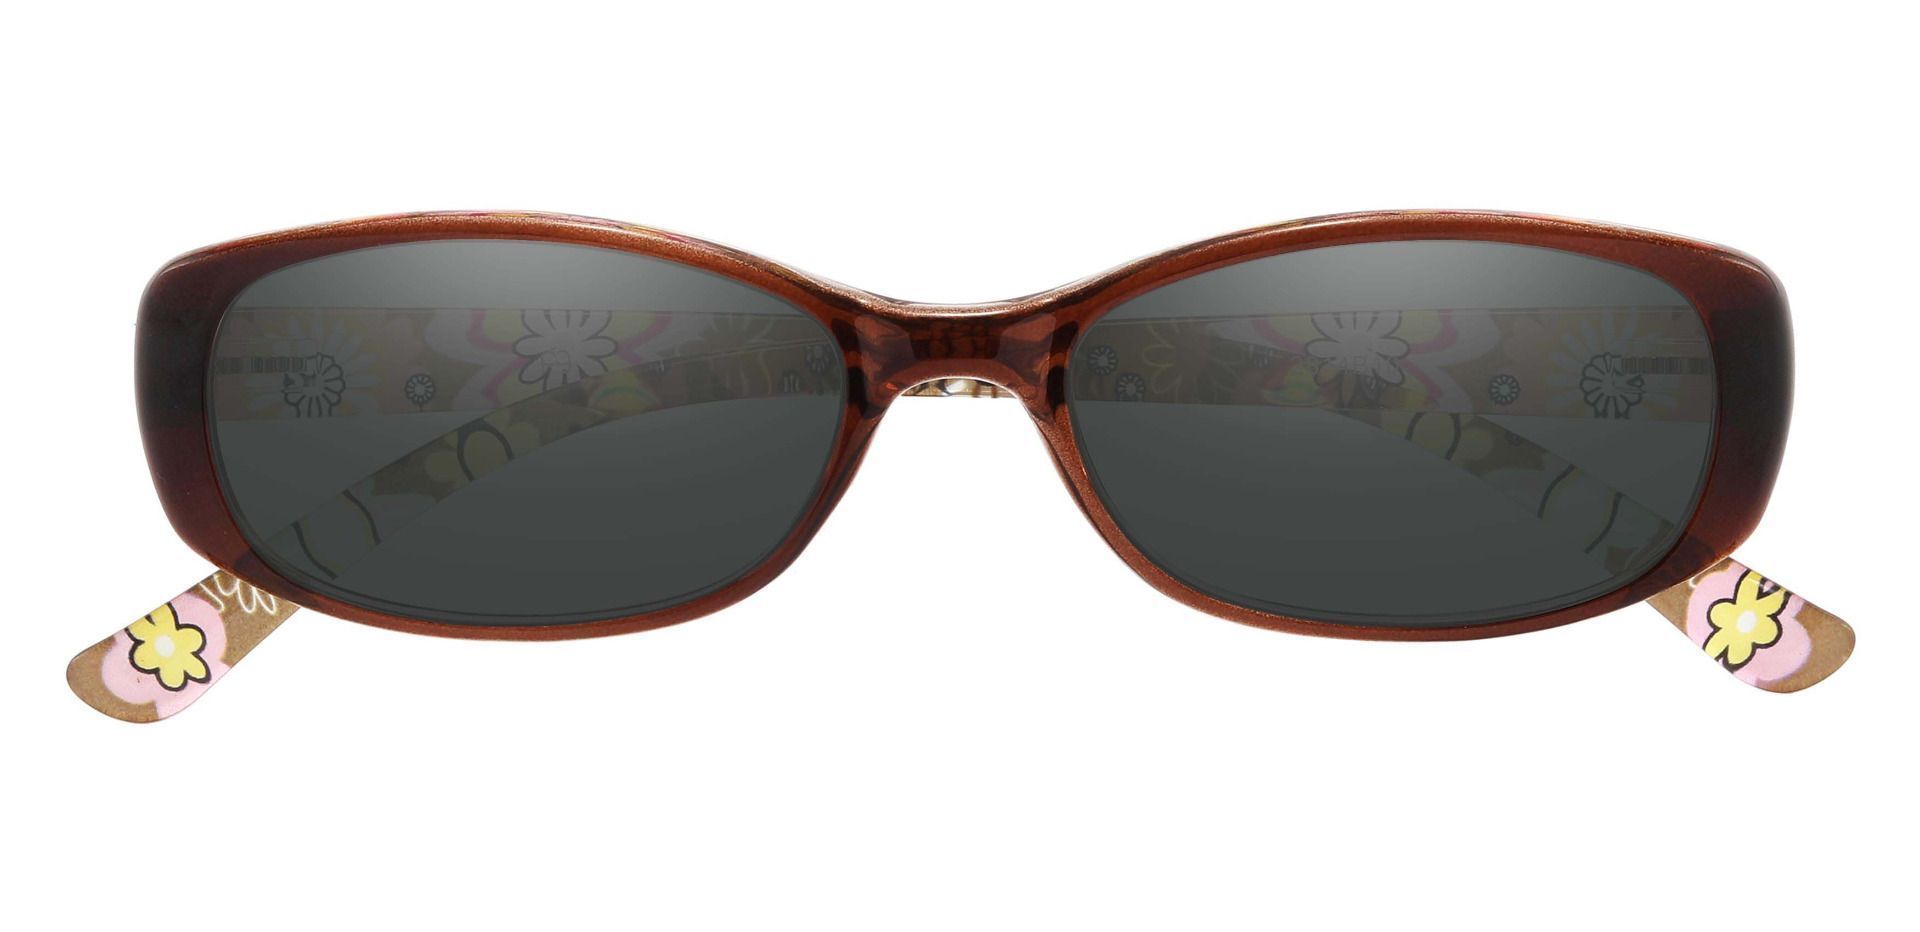 Bethesda Rectangle Progressive Sunglasses - Brown Frame With Gray Lenses